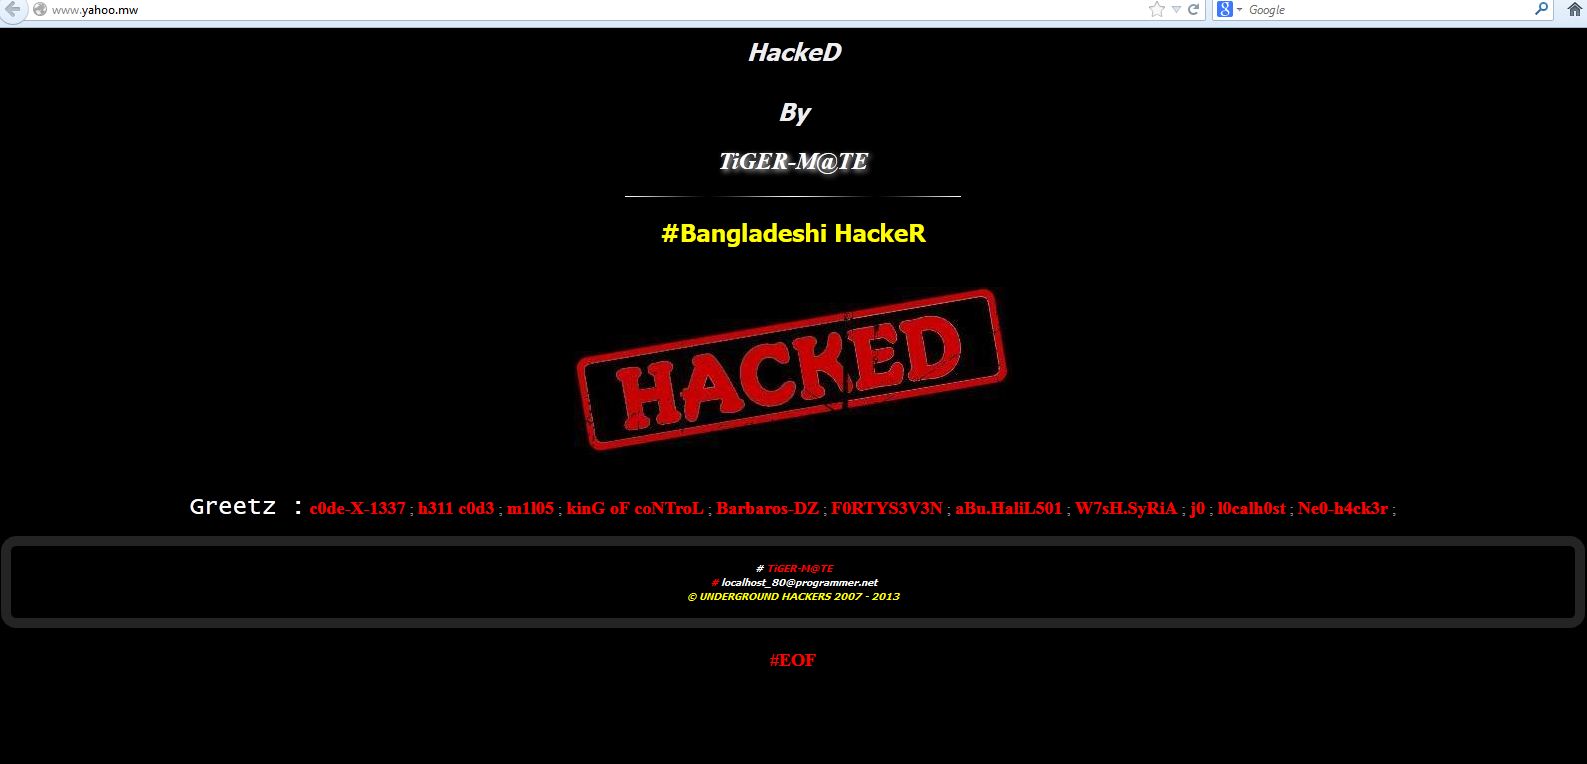 tiger-mate-Malawi-hacked